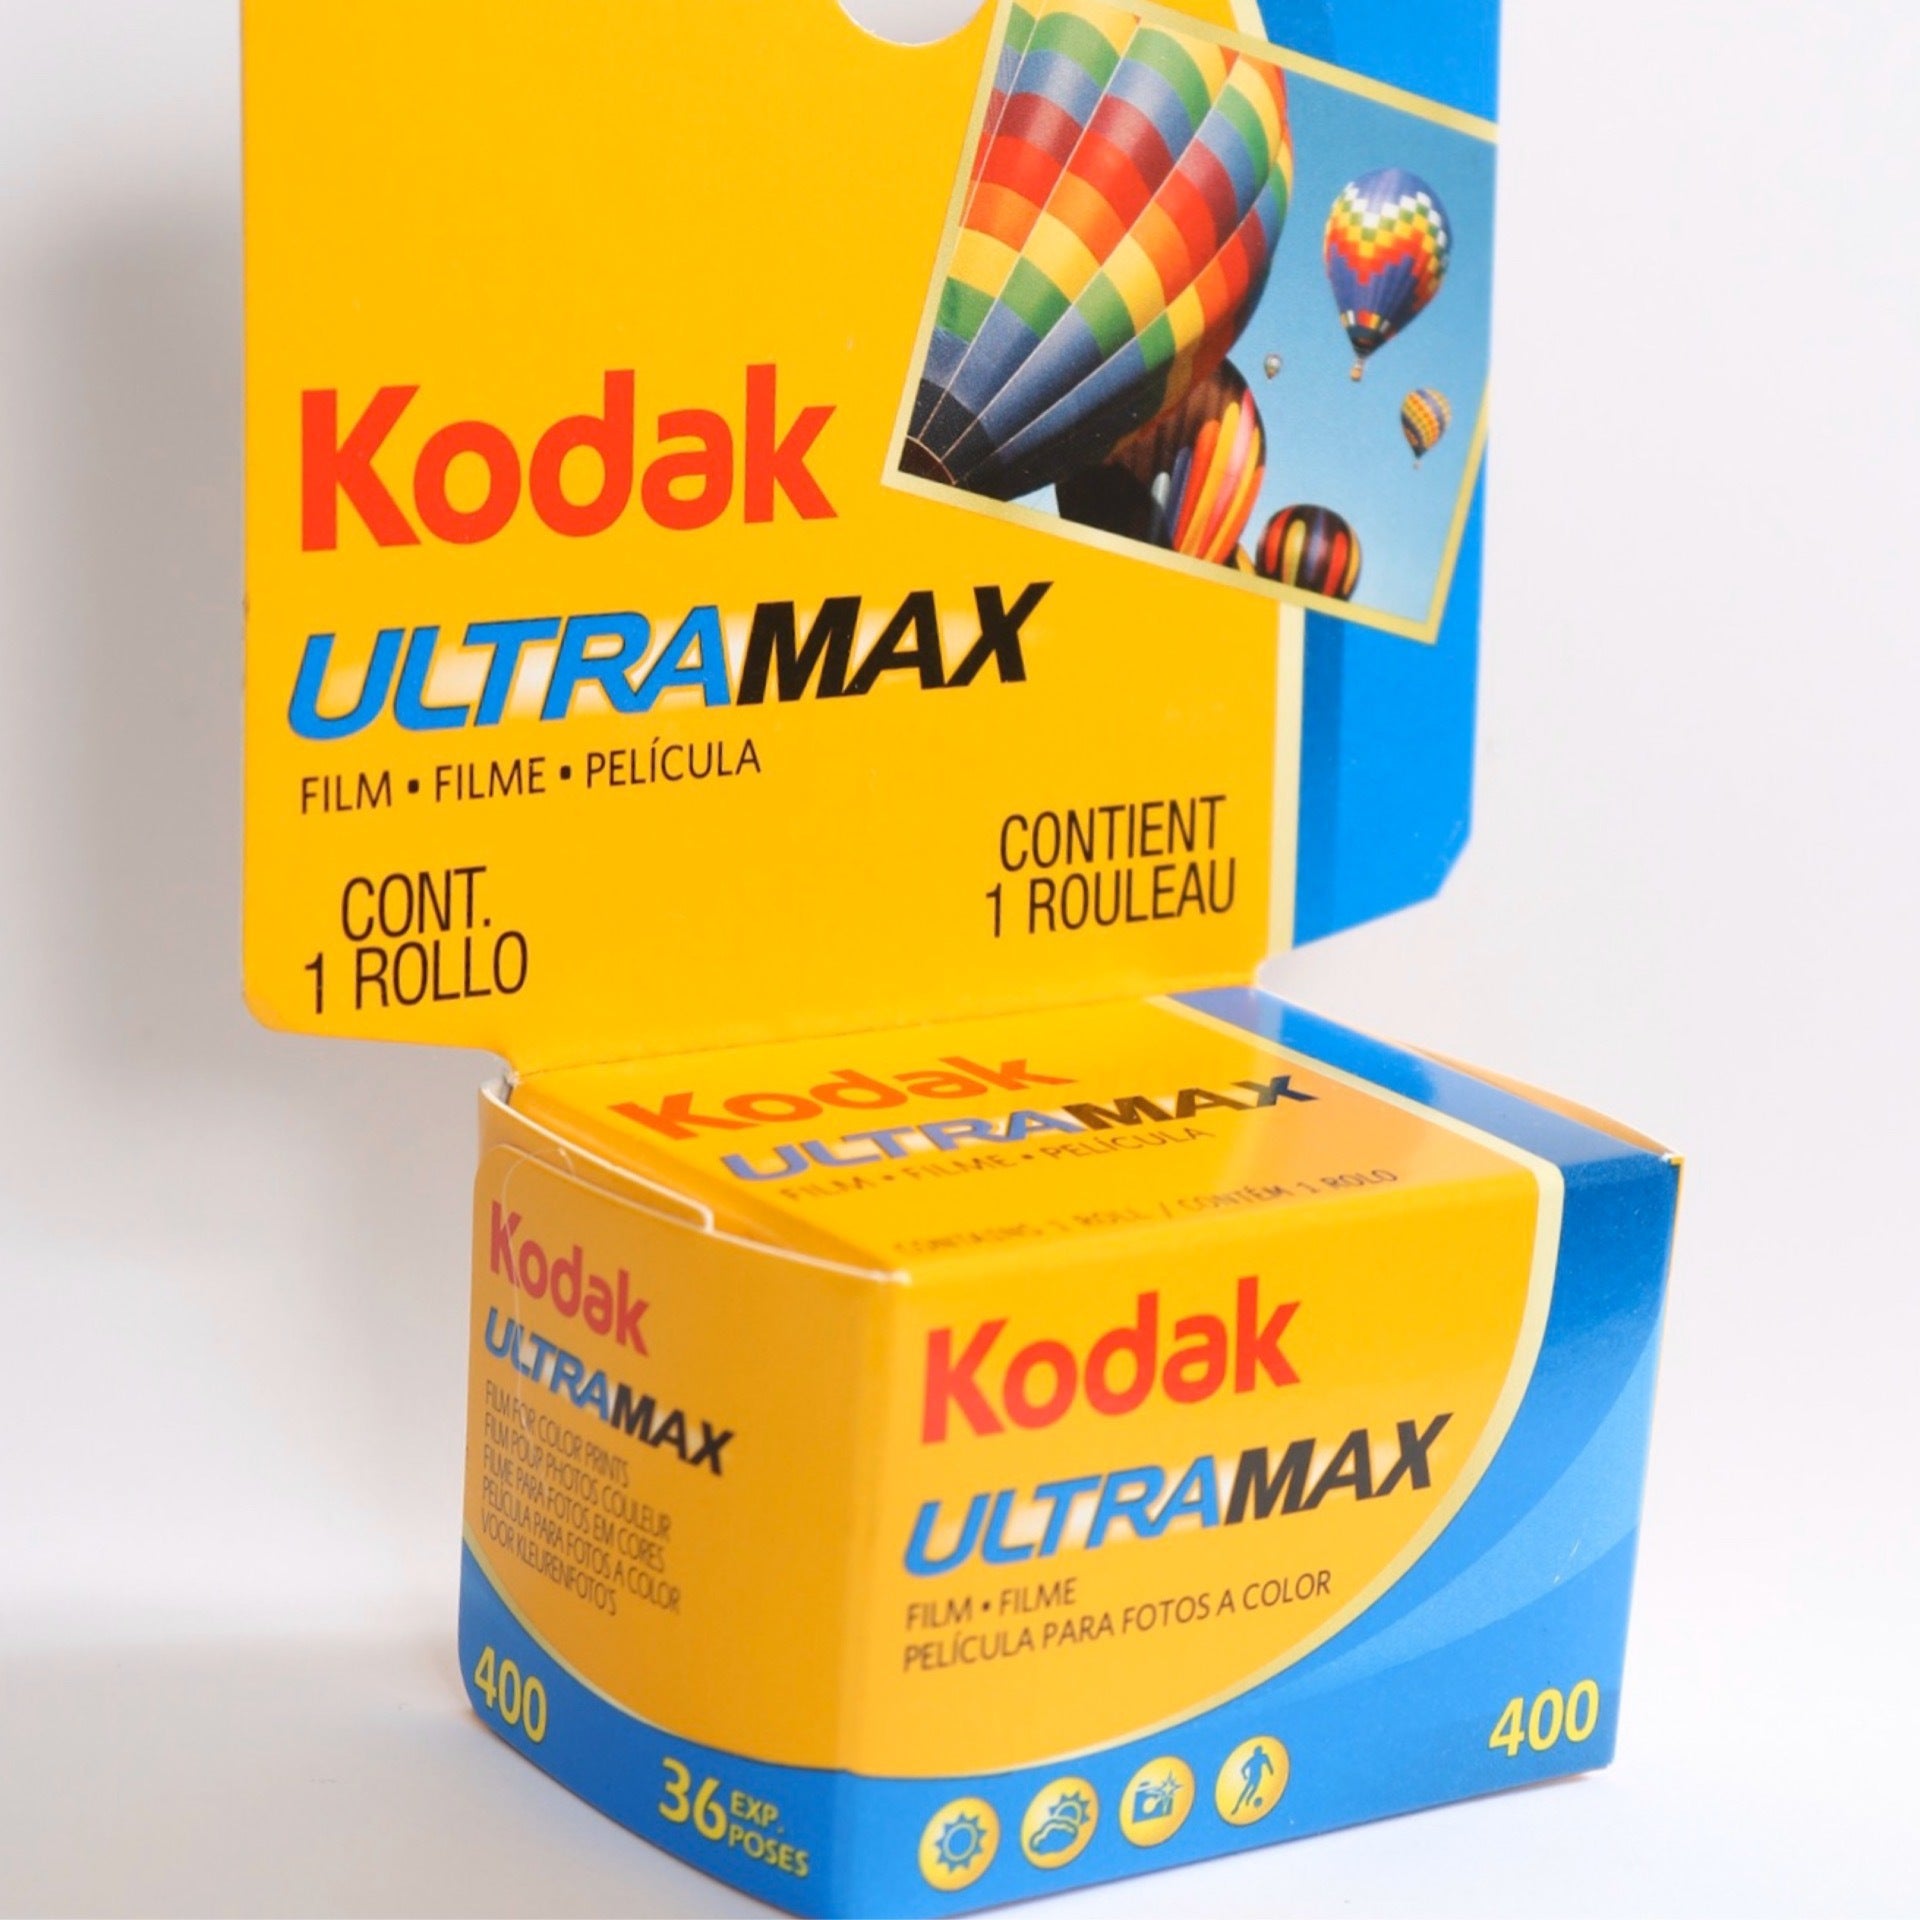 Kodak Ultramax 400 (36) 35mm